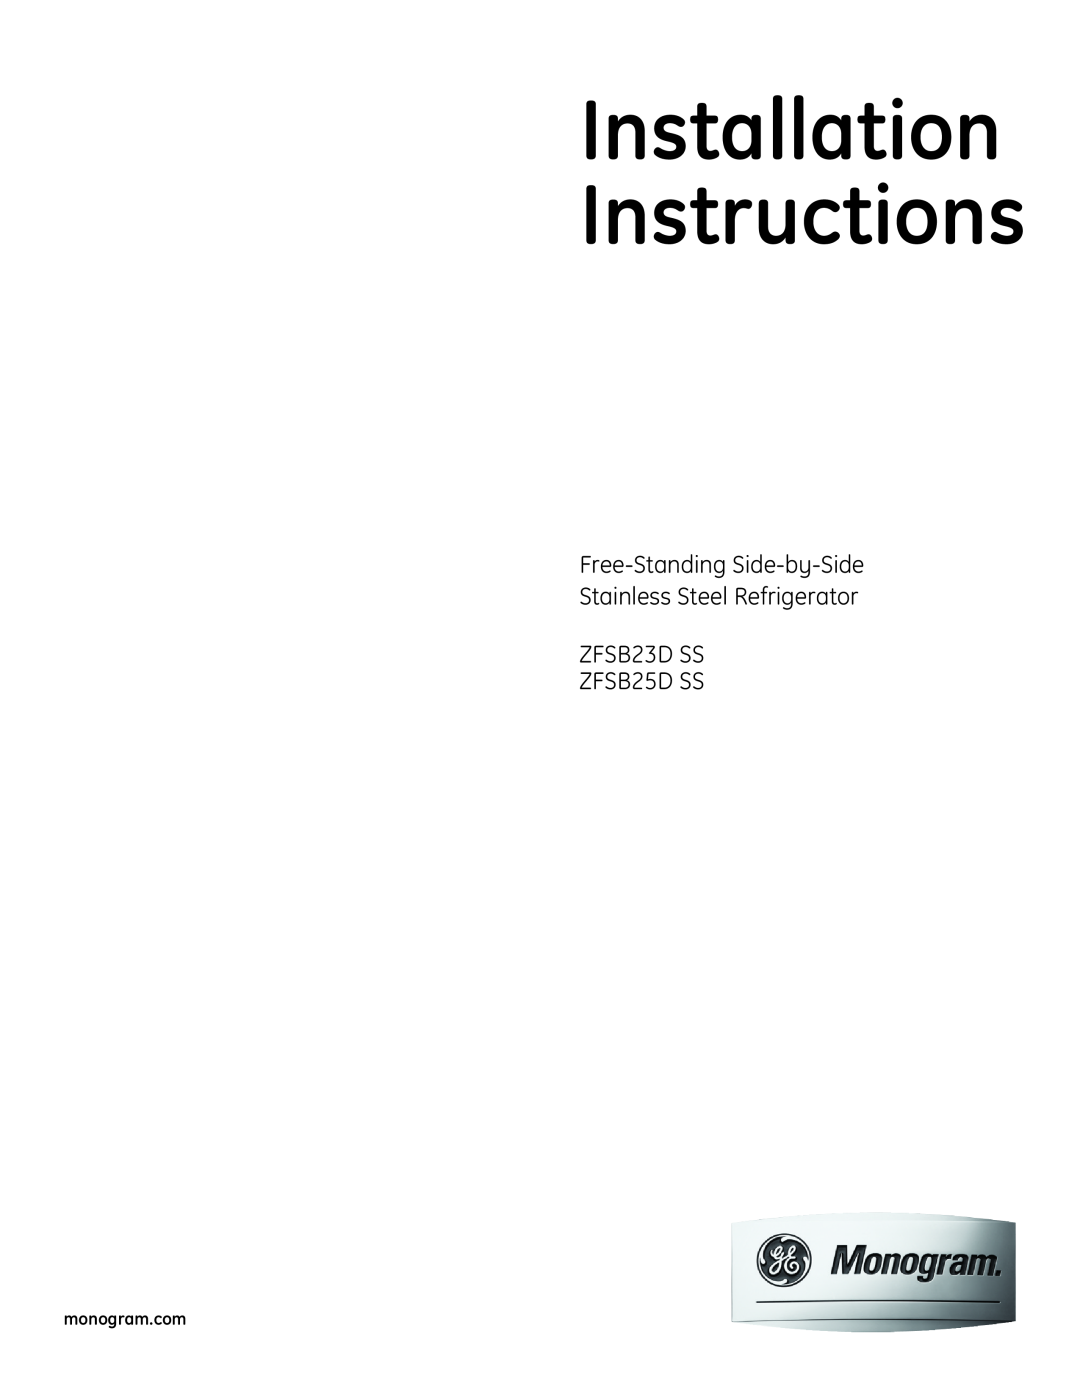 GE Monogram ZFSB23DSS installation instructions Installation Instructions, ZFSB25D SS 